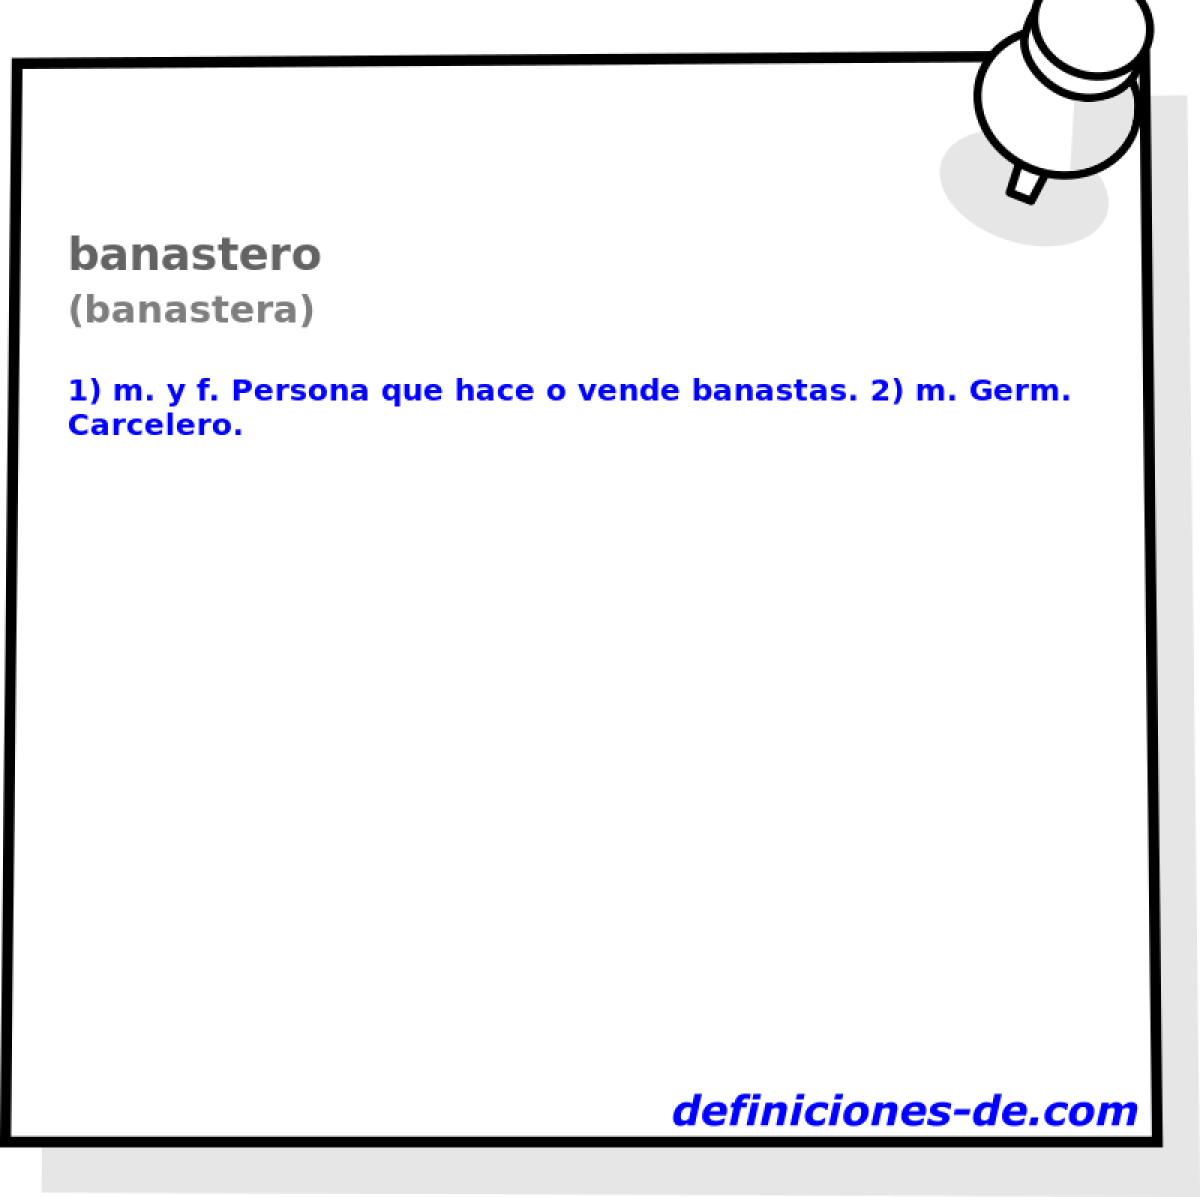 banastero (banastera)